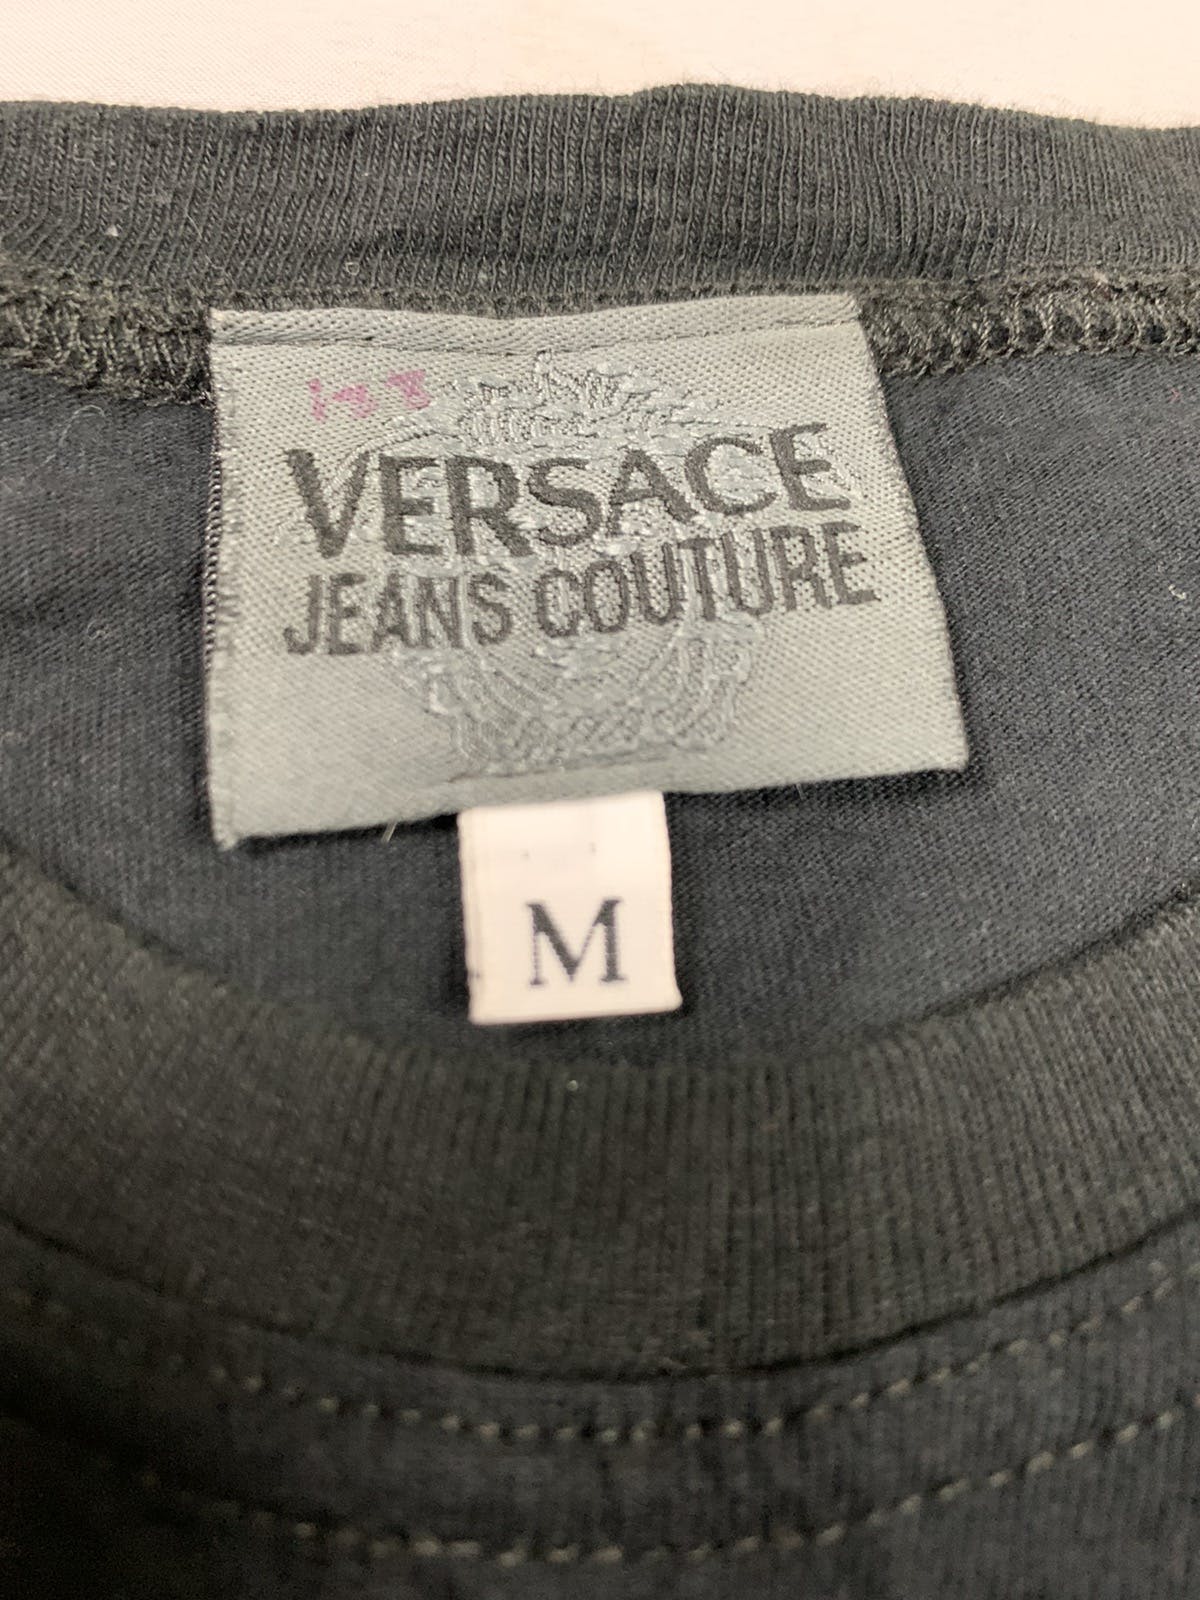 Versace jeans couture x bruce webber - 4